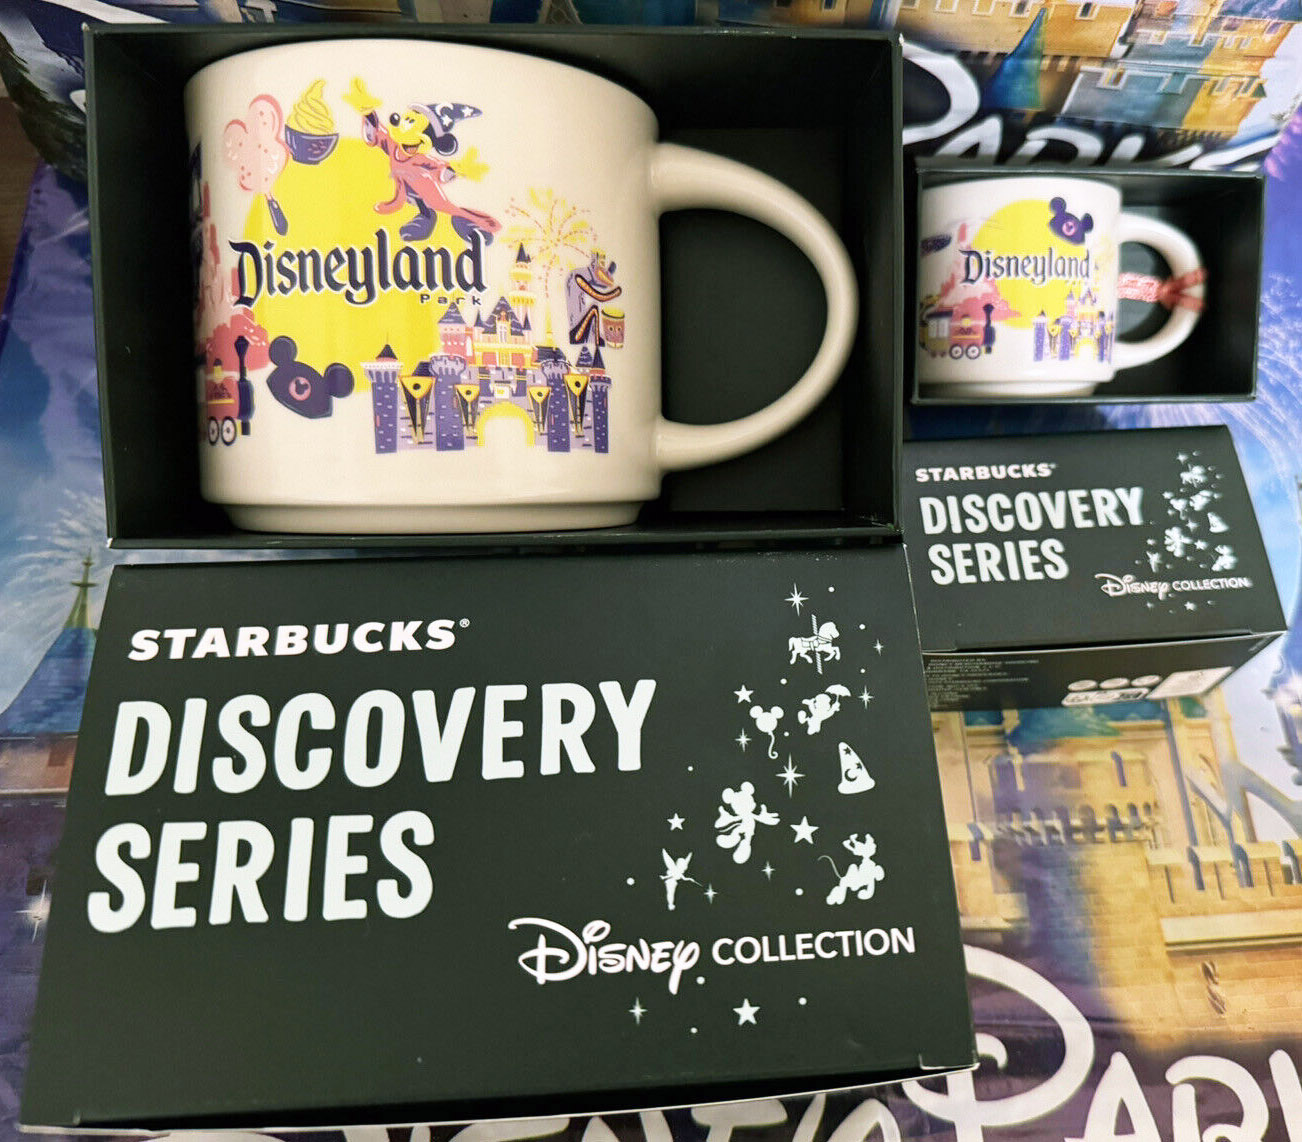 Starbucks Starbucks Discovery Series mug